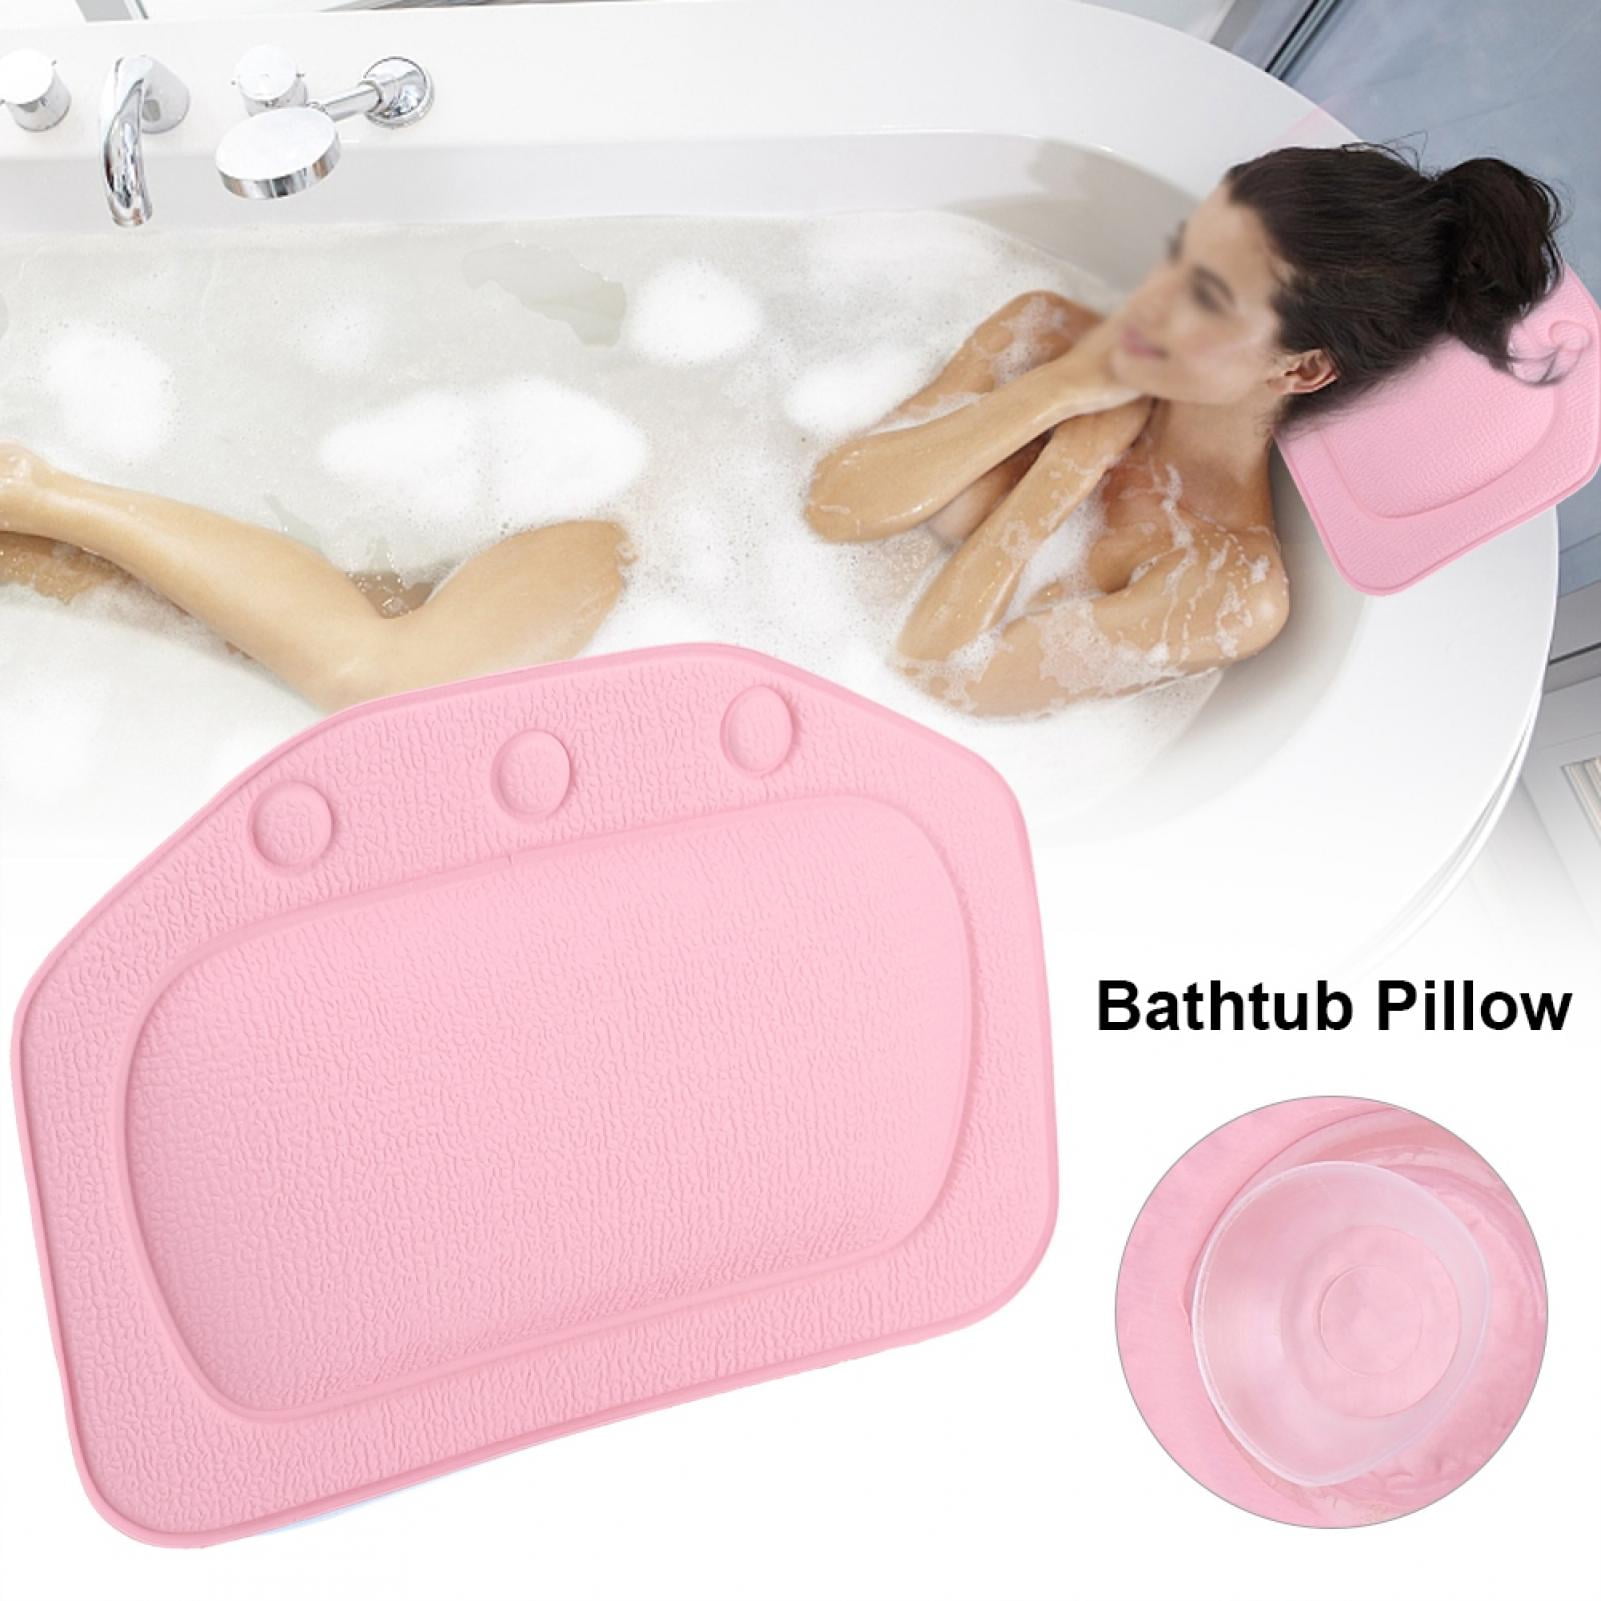 Inflatable Bath Pillow Bathtub Spa Head Rest Neck Support Relax-Tub Y4D0 D0P0 